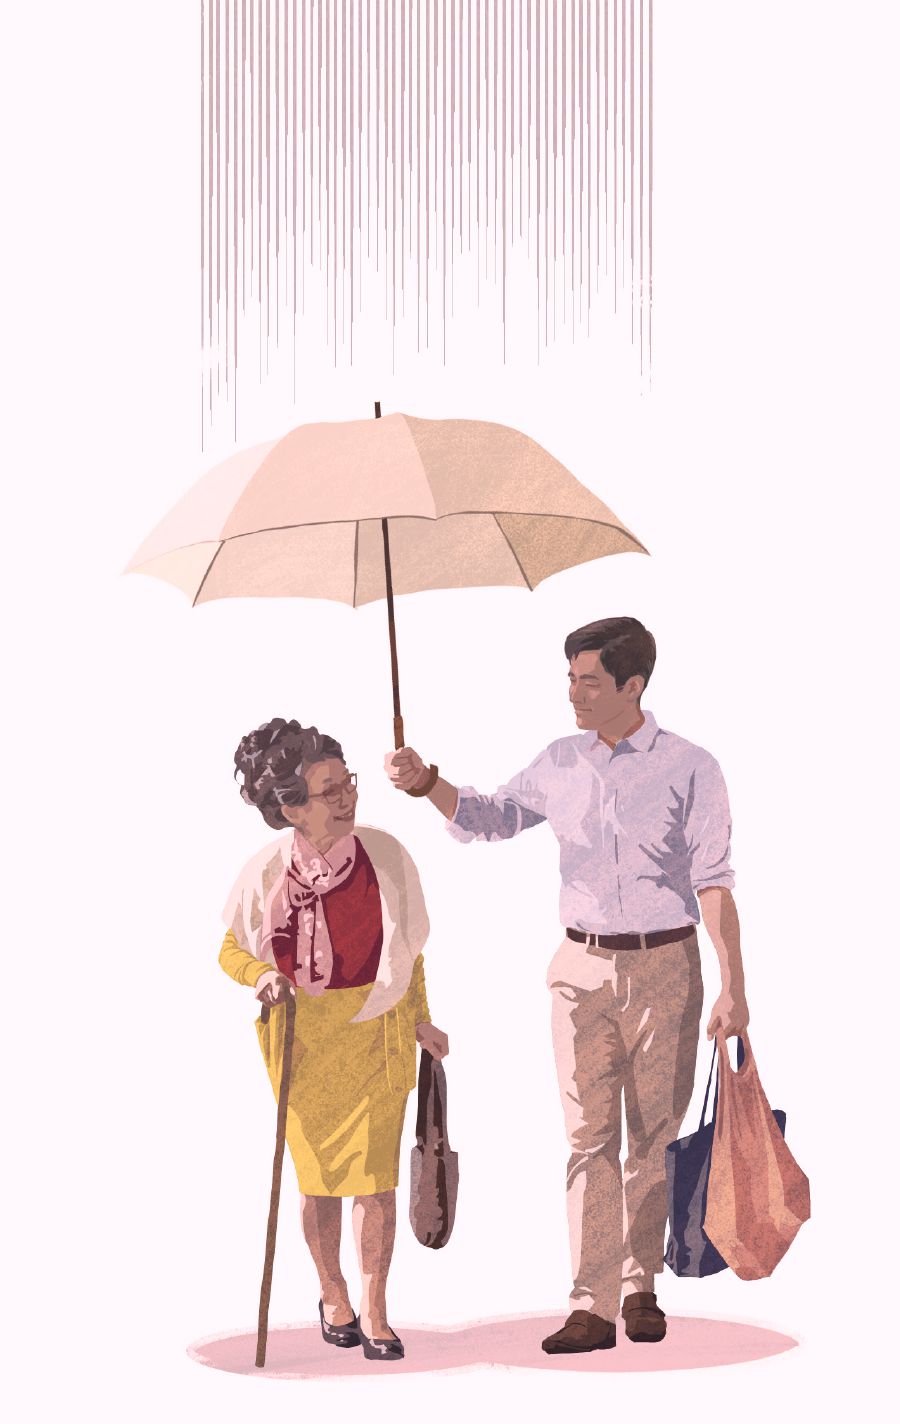 A man shares his umbrella with an elderly woman